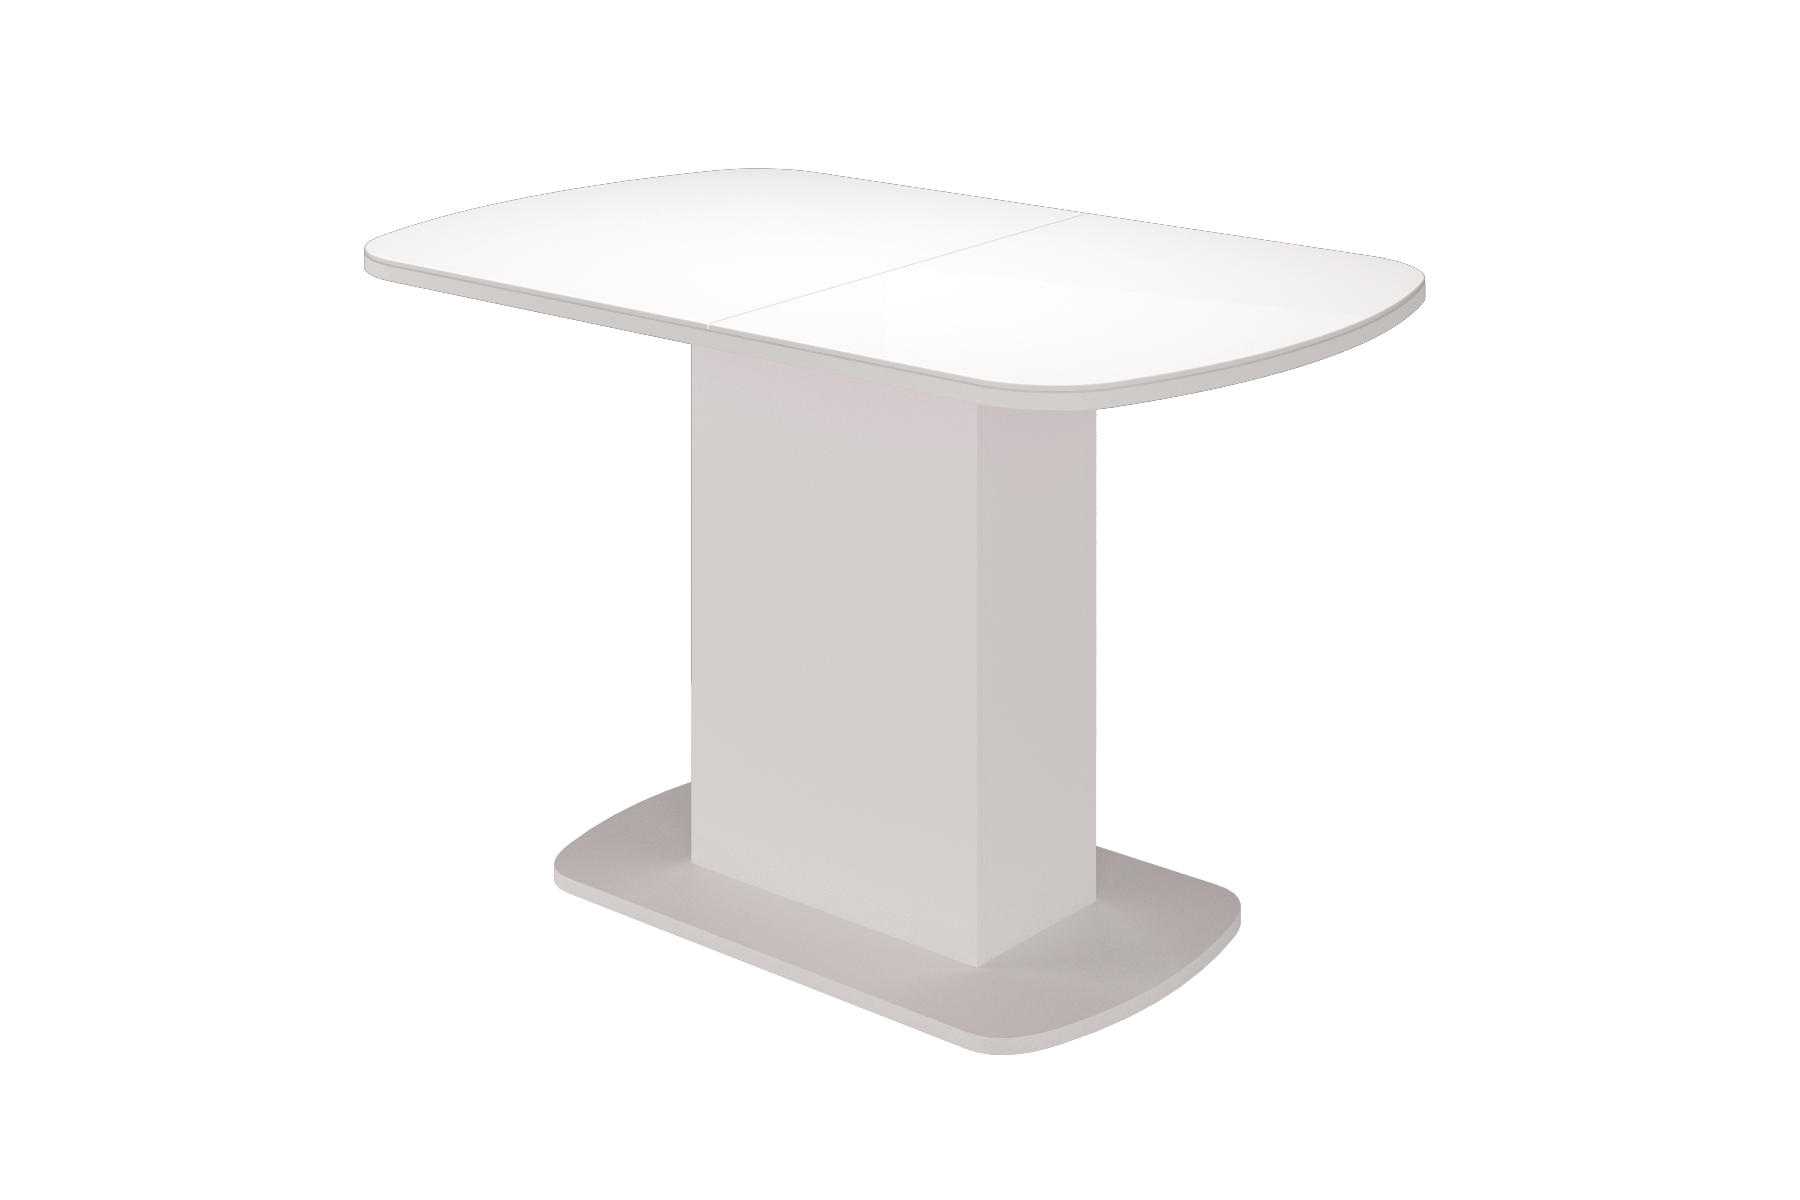 Кухонный стол раздвижной. Стол обеденный MLK раздвижной 1100/1420х700 Соренто 2. Стол Соренто 2. Стол Соренто белый. Стол Соренто Можга.